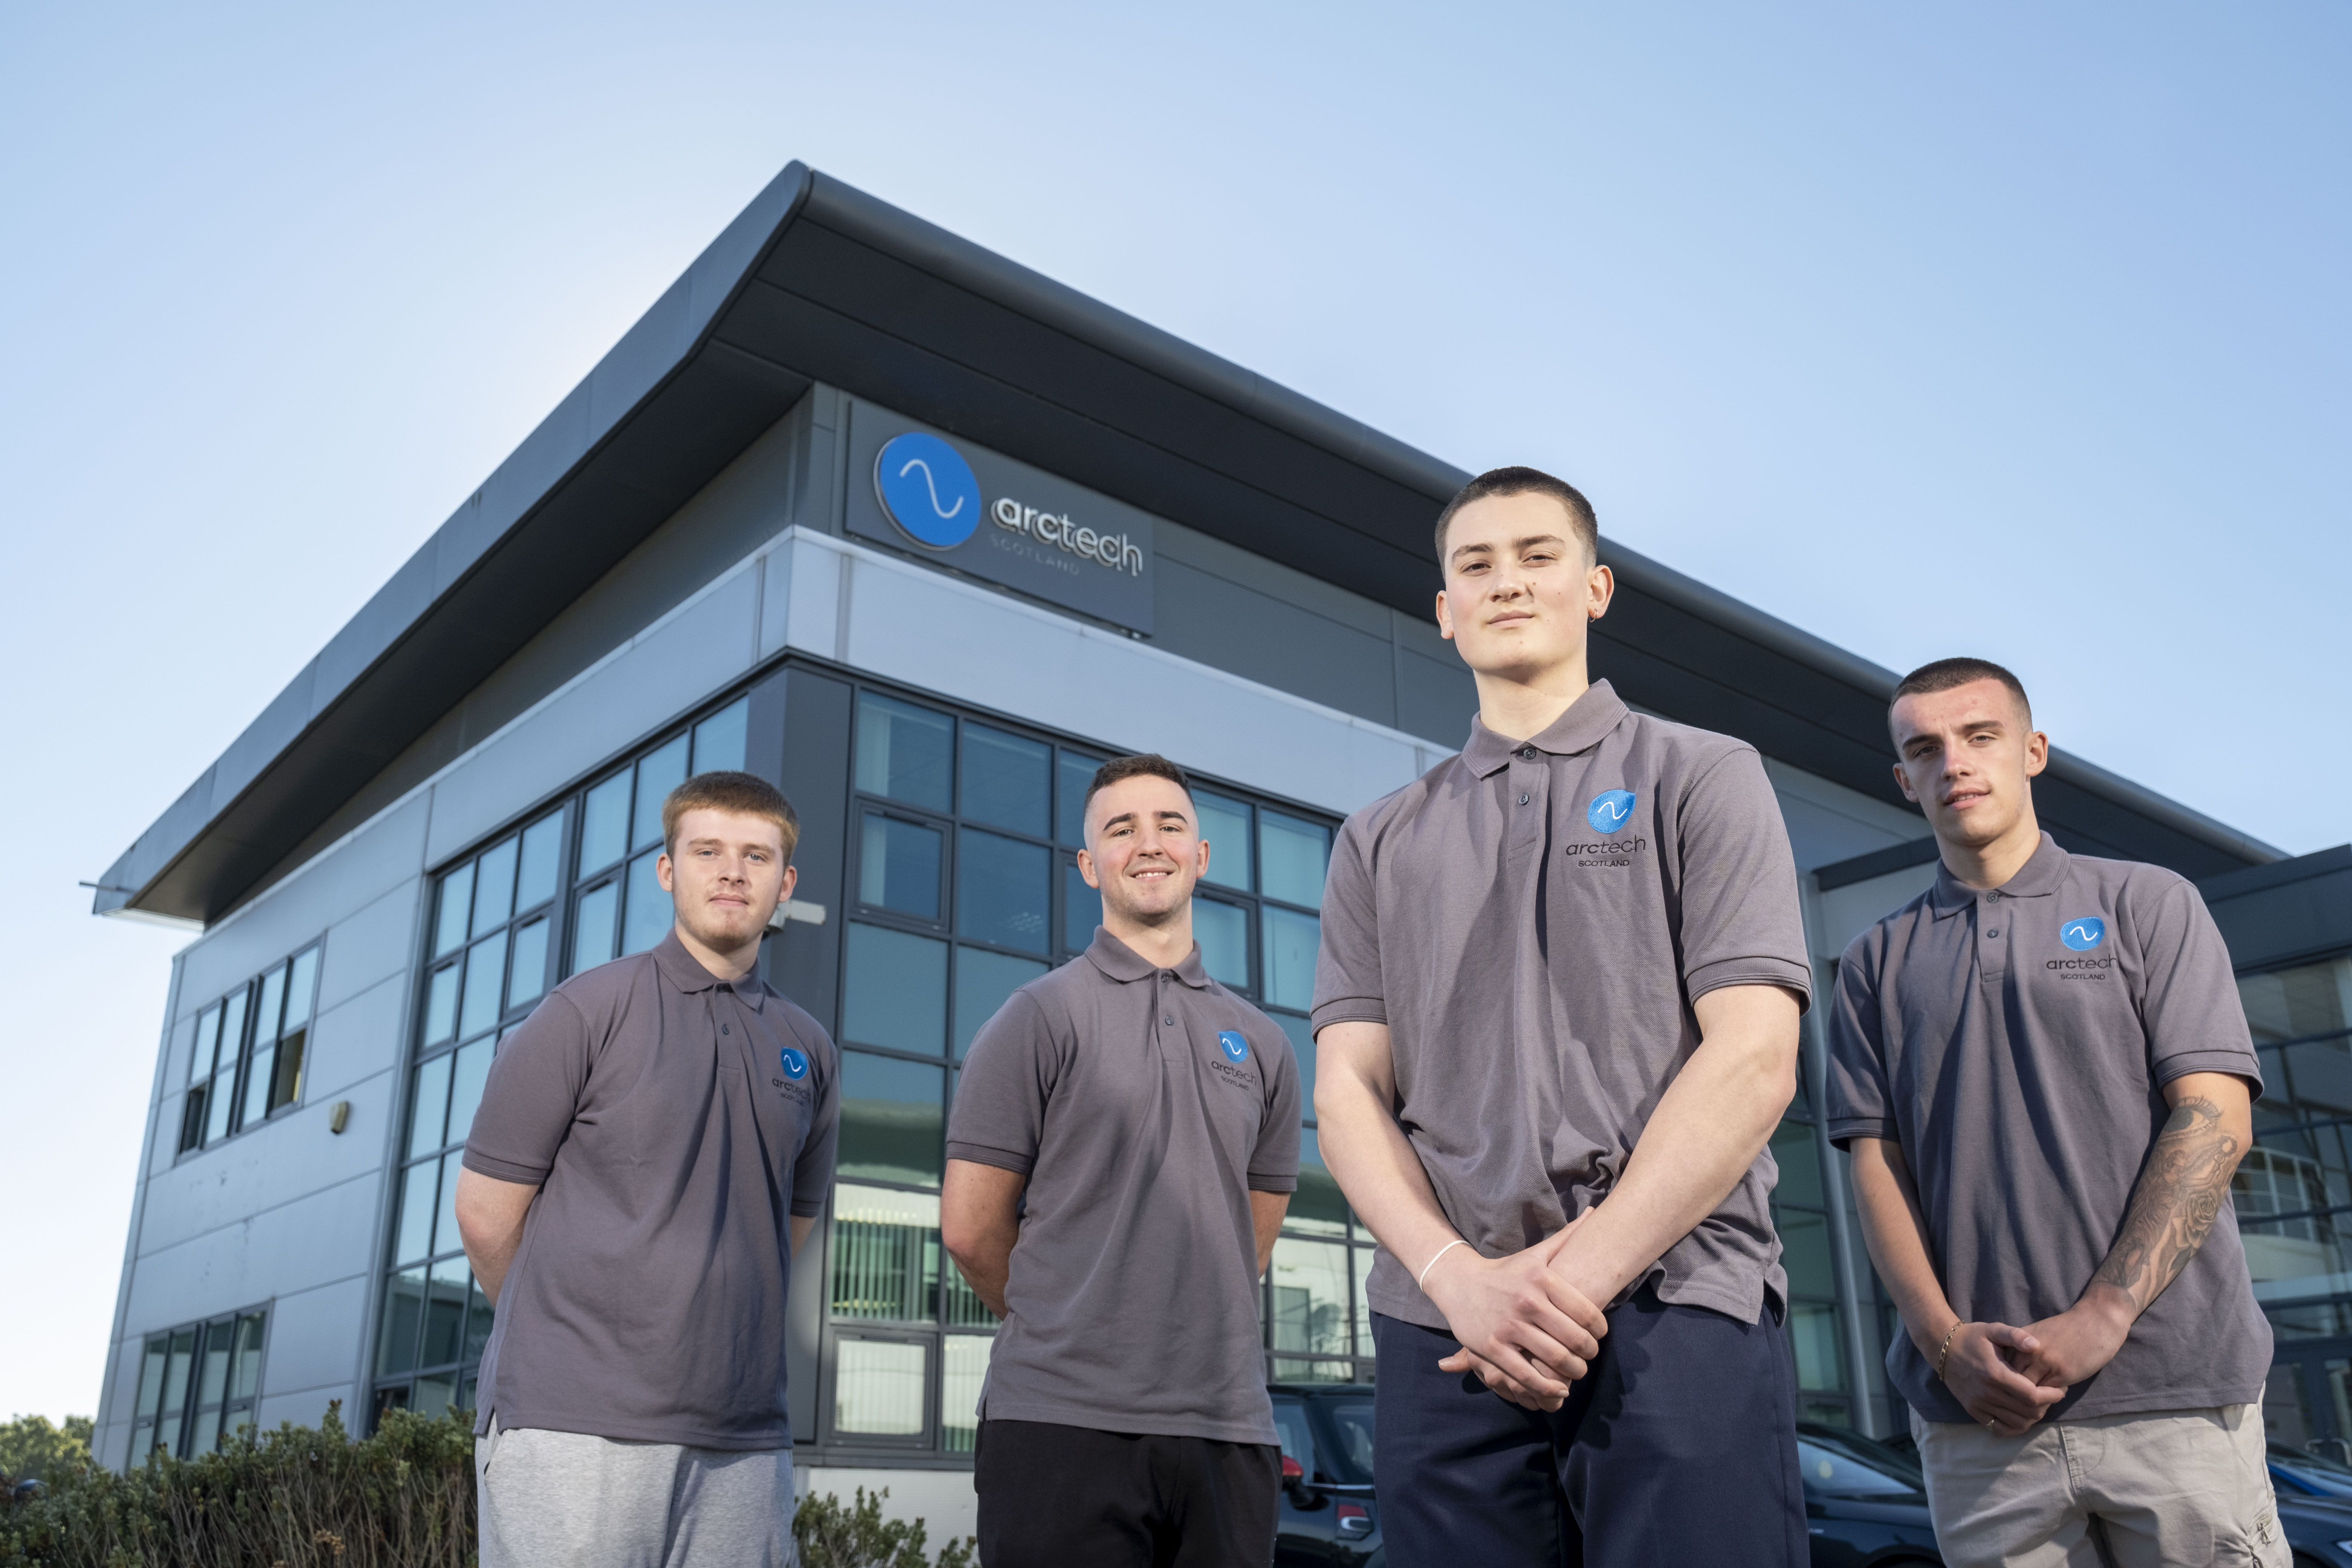 Arc-Tech (Scotland) employs five new apprentices